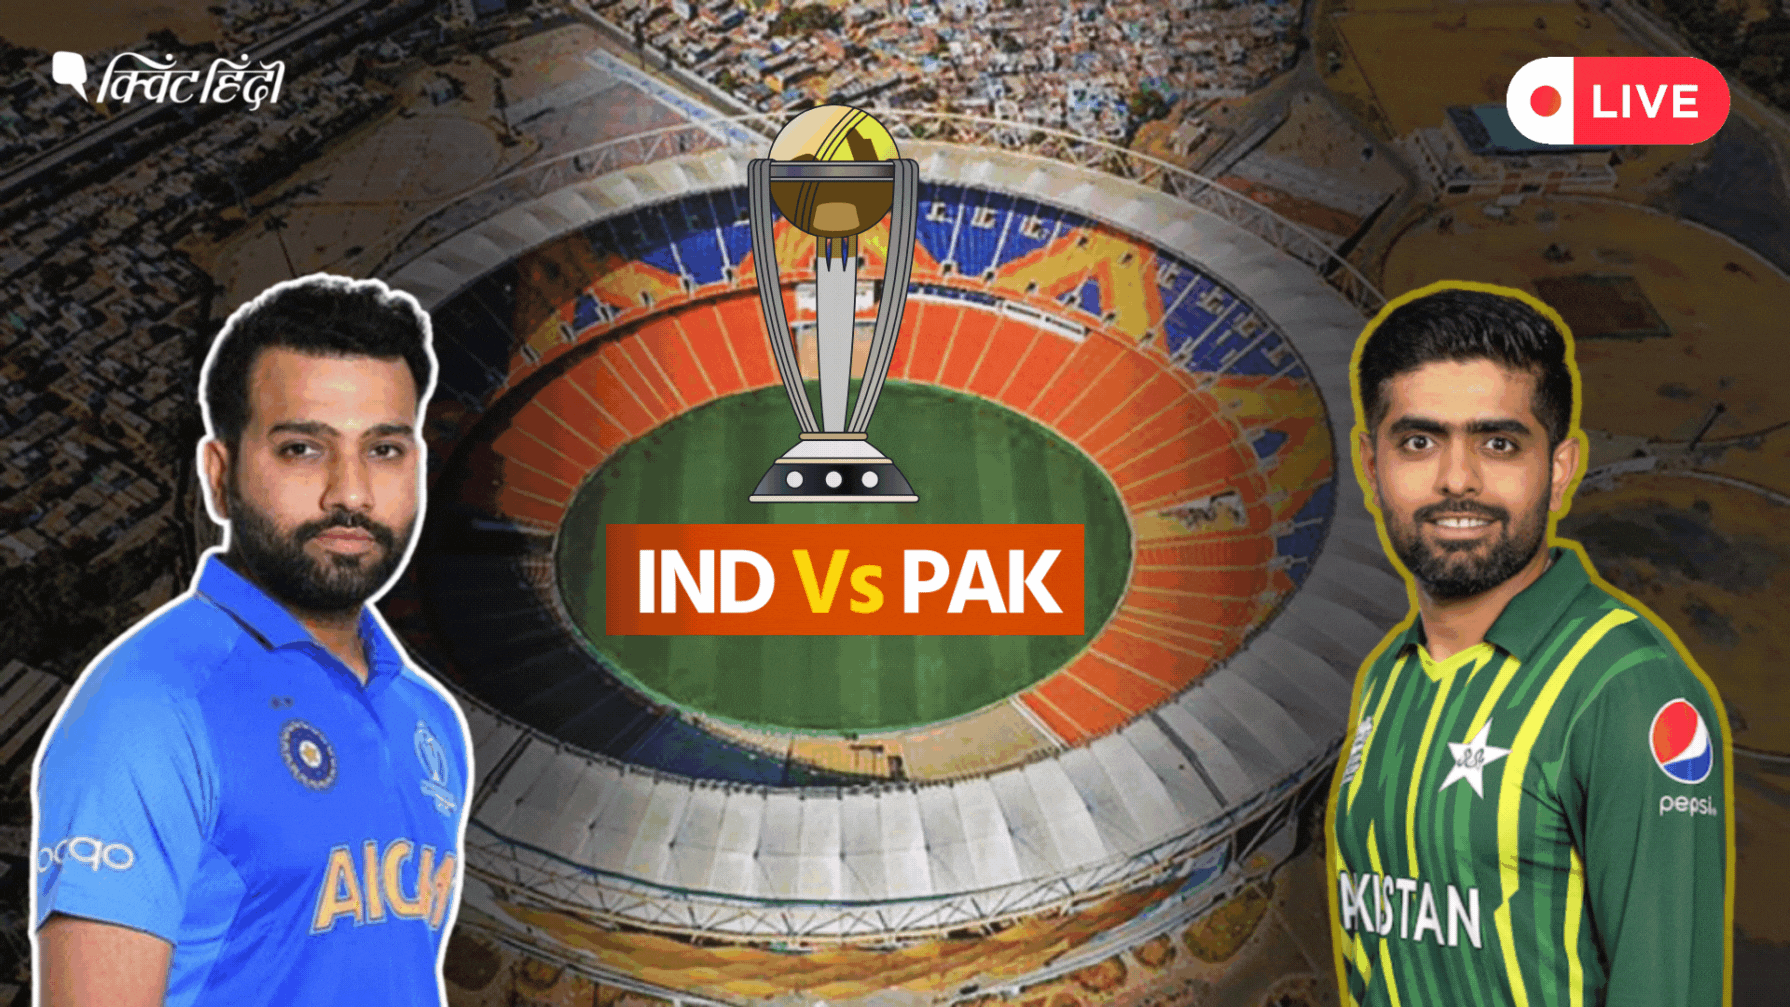 India vs Pakistan Live Score, Today’s Ind vs Pak Match Score, ICC